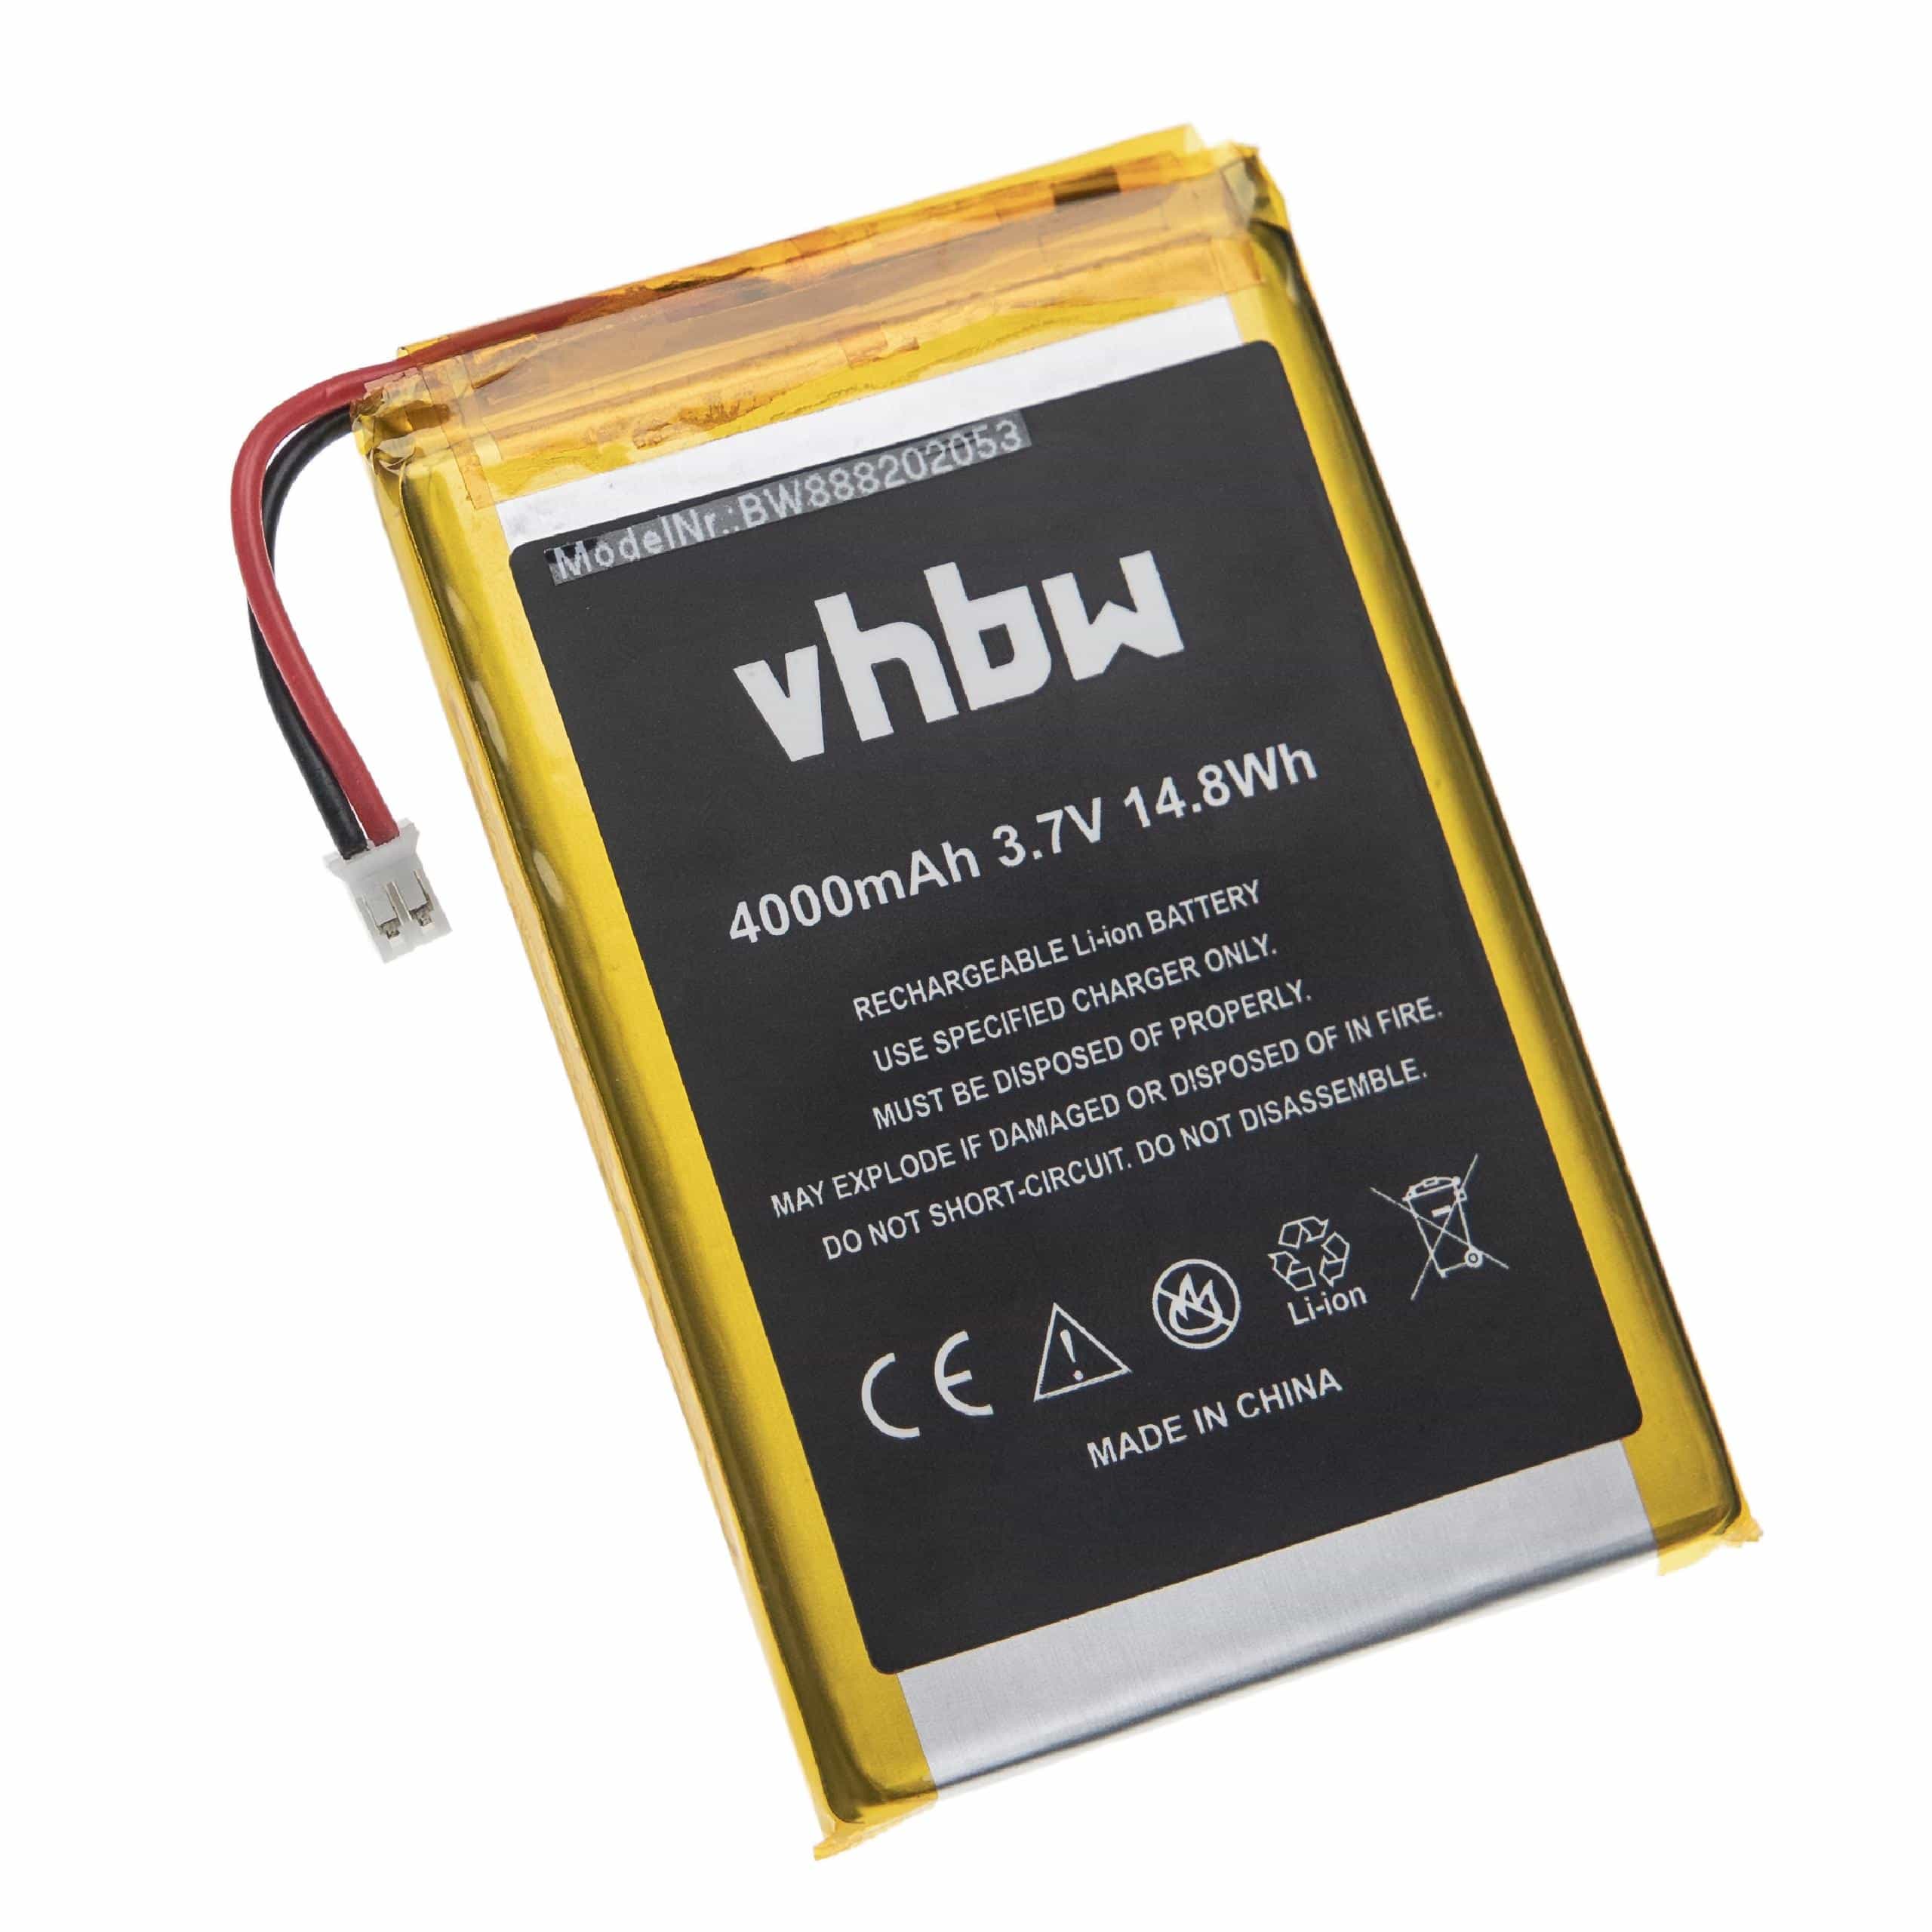 Intercom Doorbell Battery Replacement for Technaxx TE4630, 4630 - 4000mAh 3.7V Li-Ion